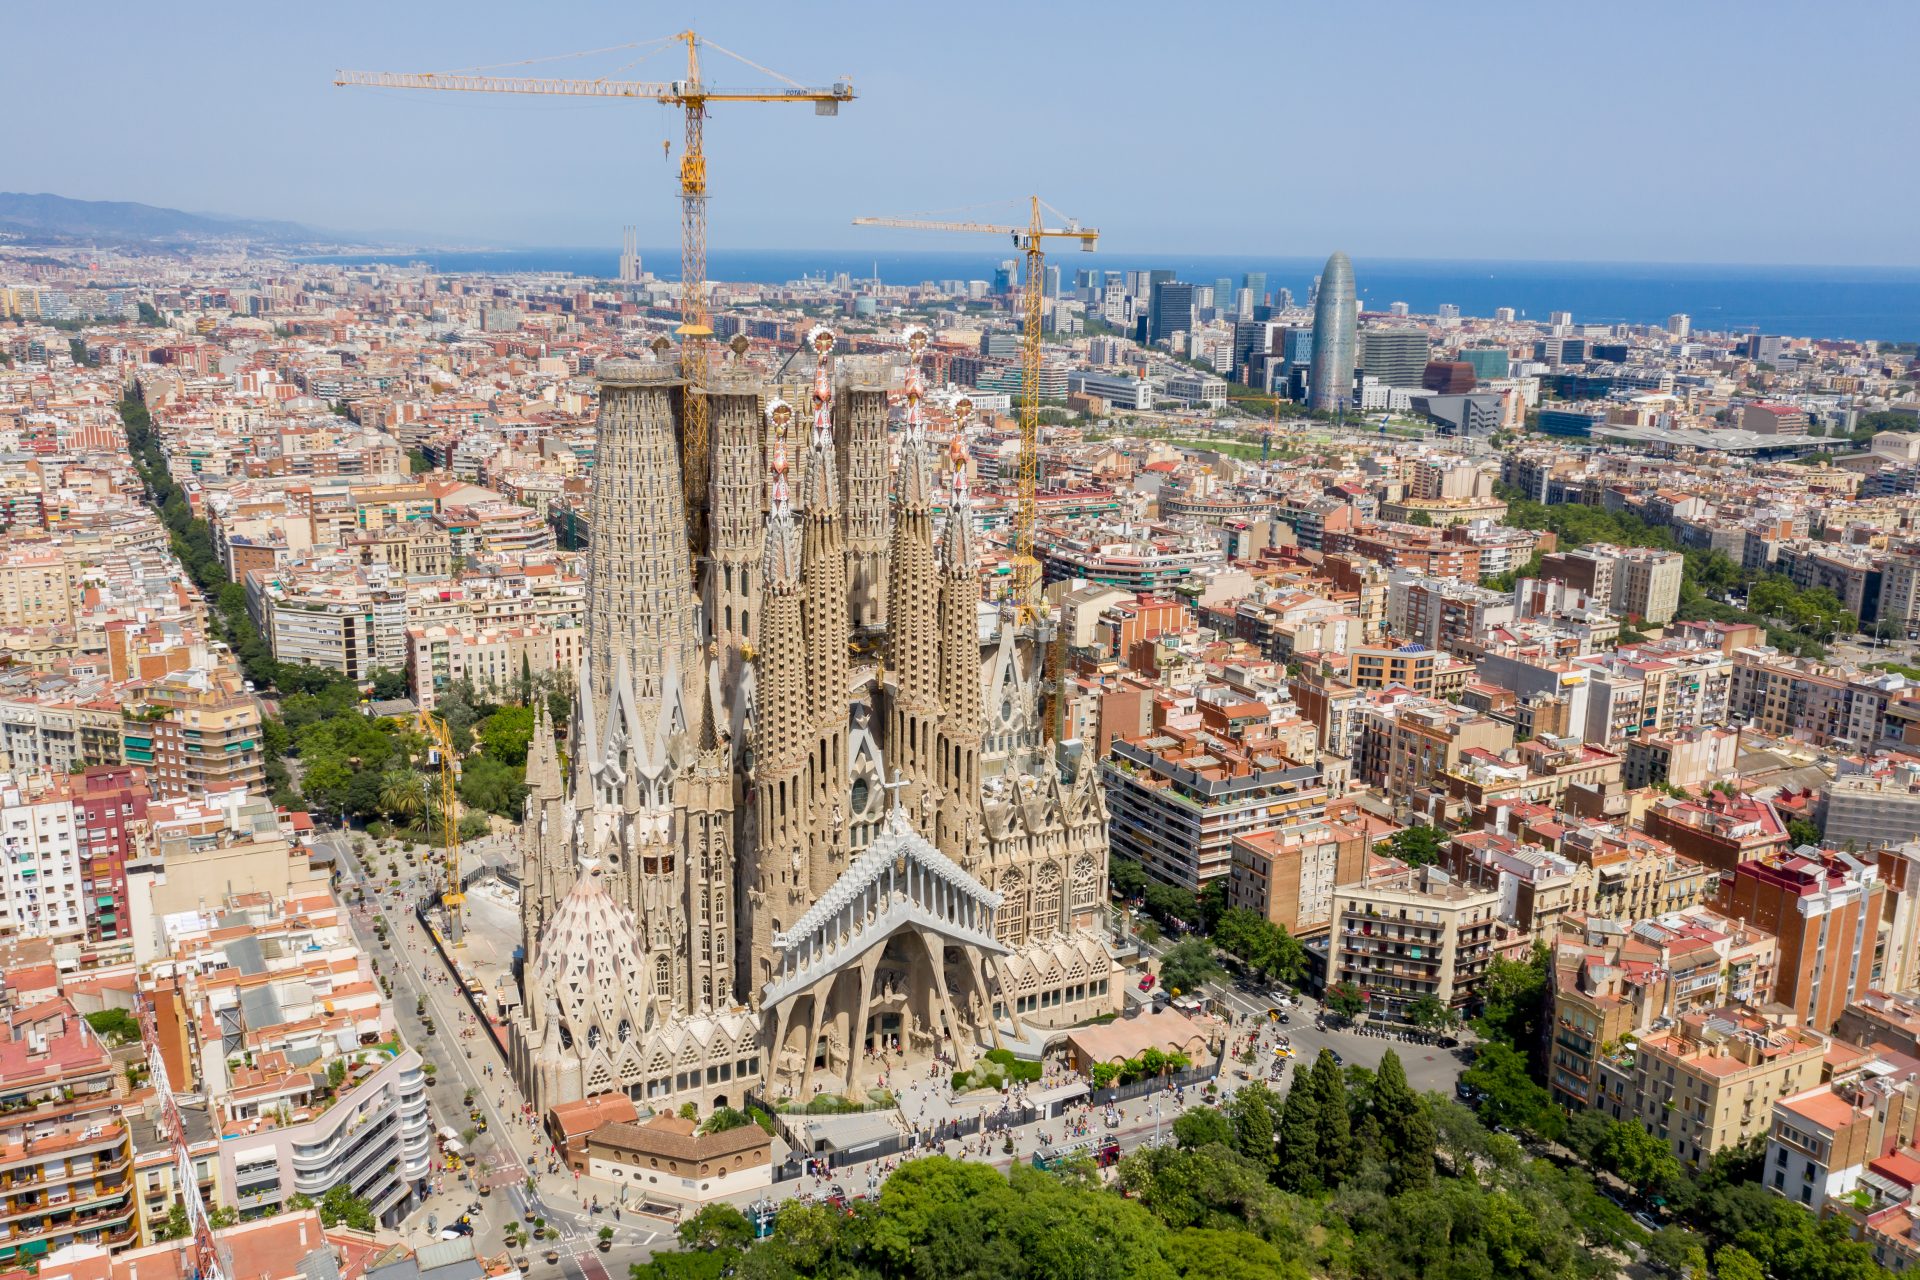 O arquiteto Antoni Gaudí